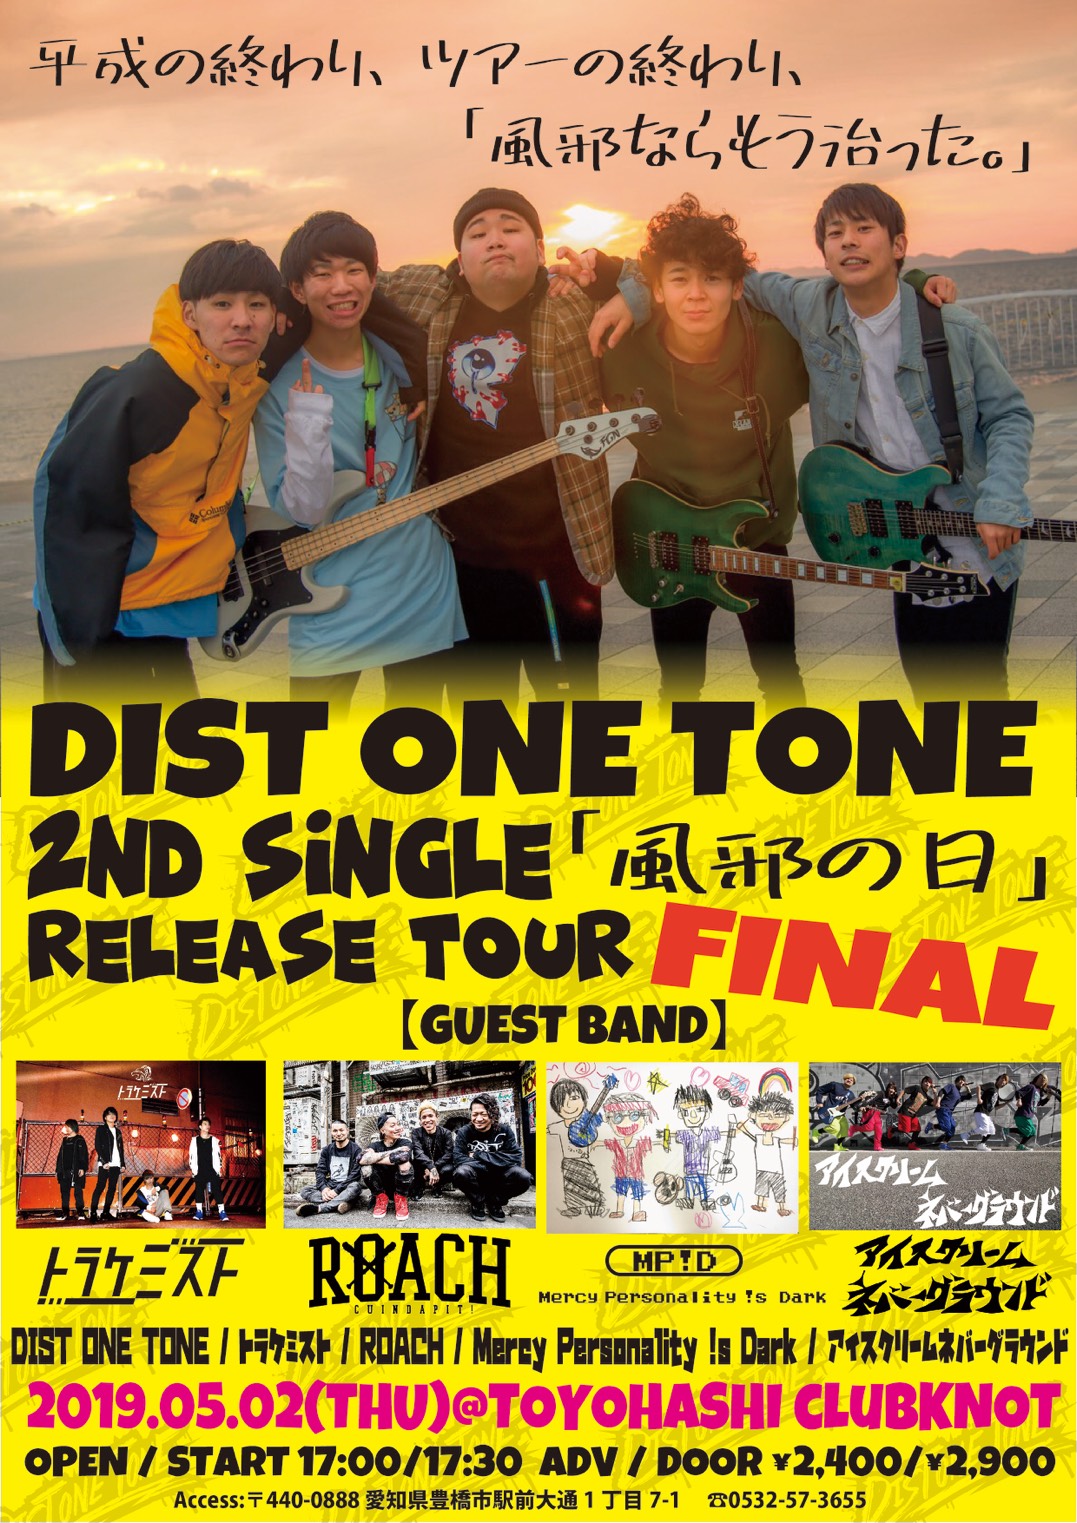 DIST ONE TONE 2nd Single「風邪の日」Release Tour Final!!